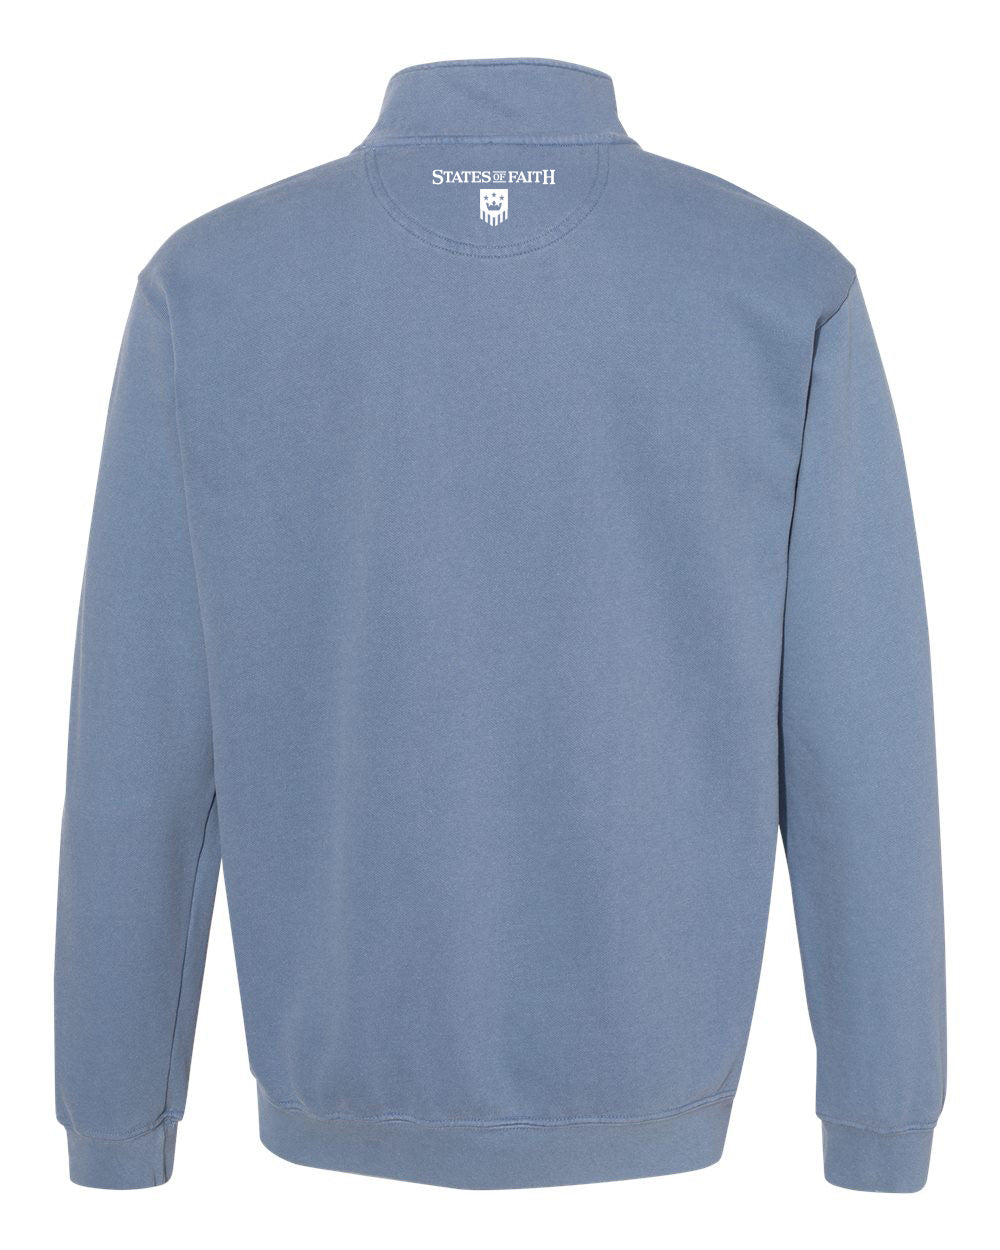 Florida State Catholic Rosary custom sweatshirt, drop hoodie, comfort colors quarter zip, pullover, Gift, State Pride, blue jean-back